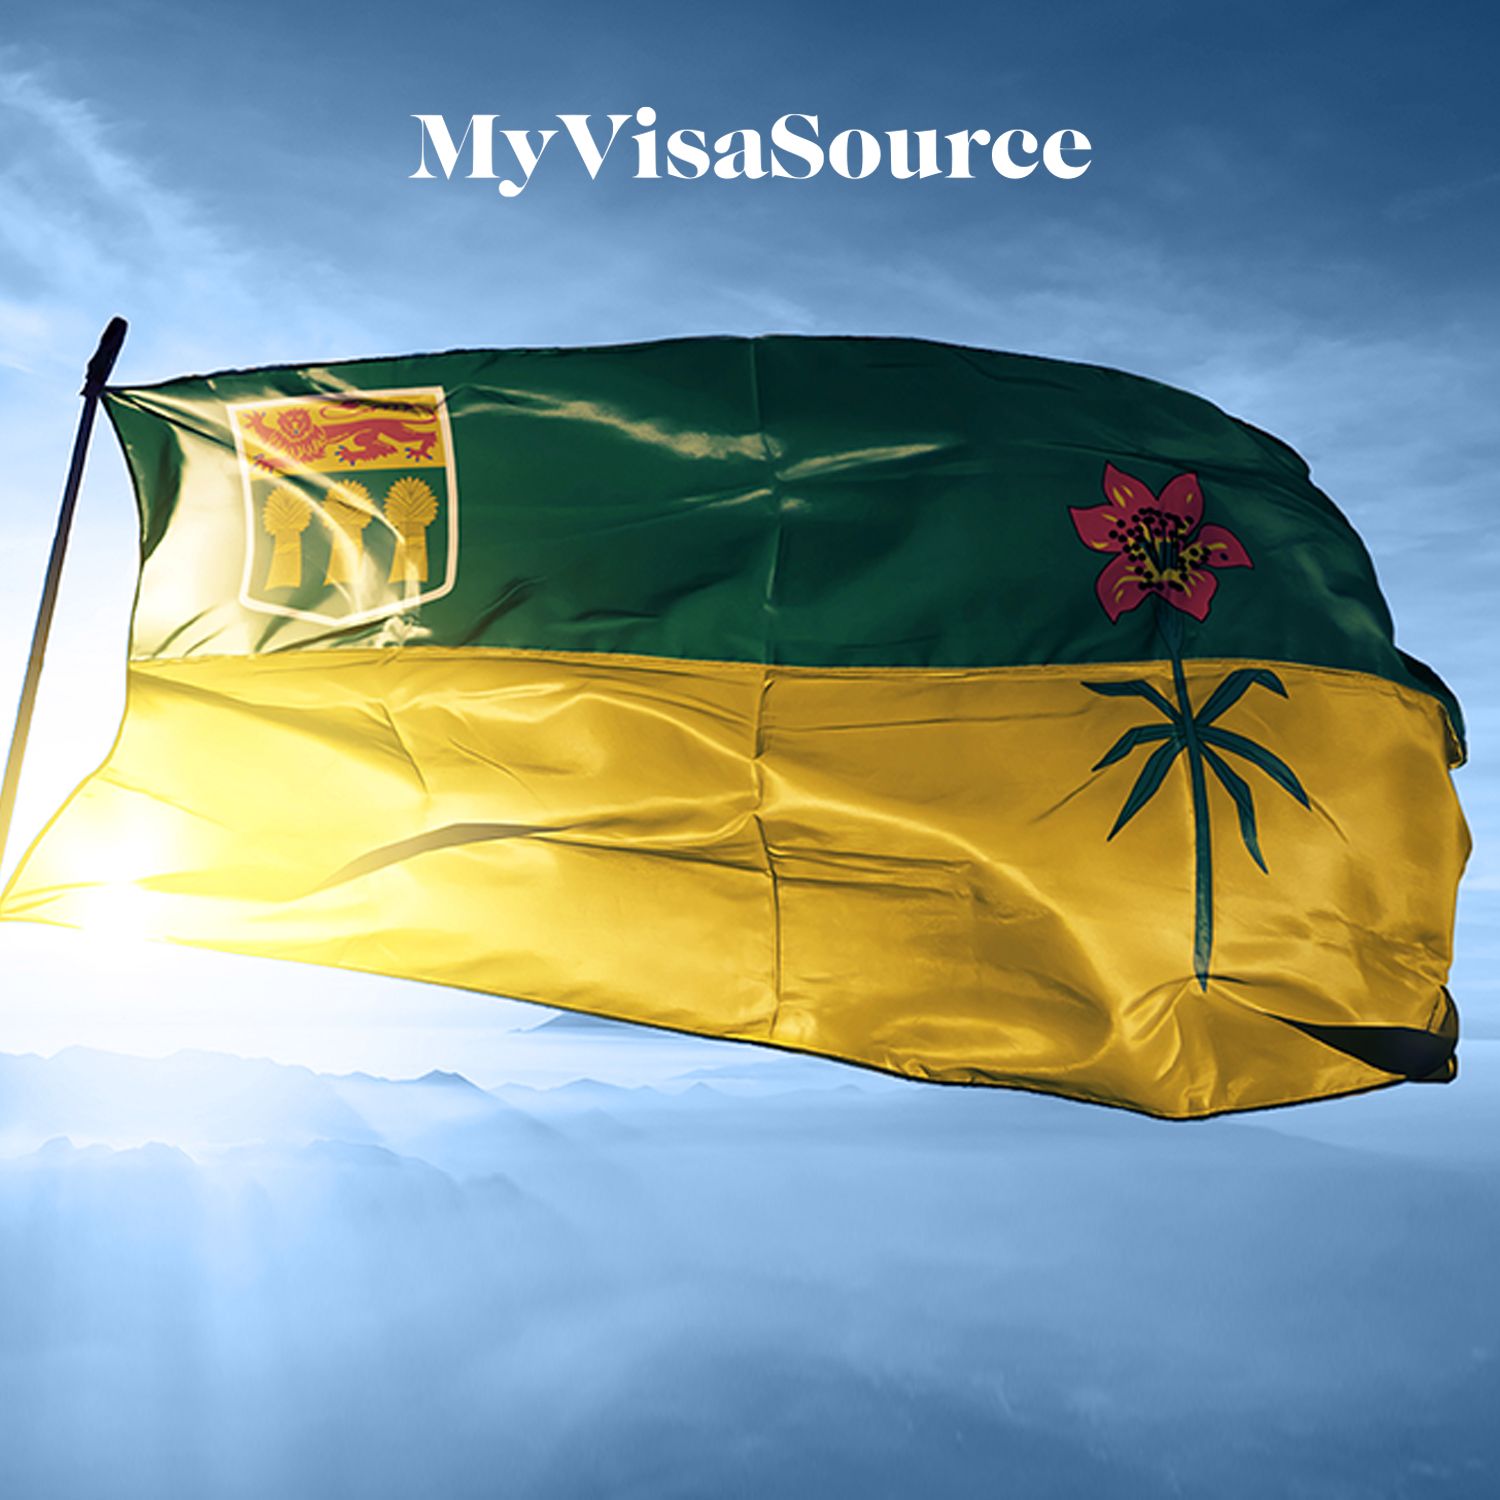 saskatchewan province of canada flag my visa source